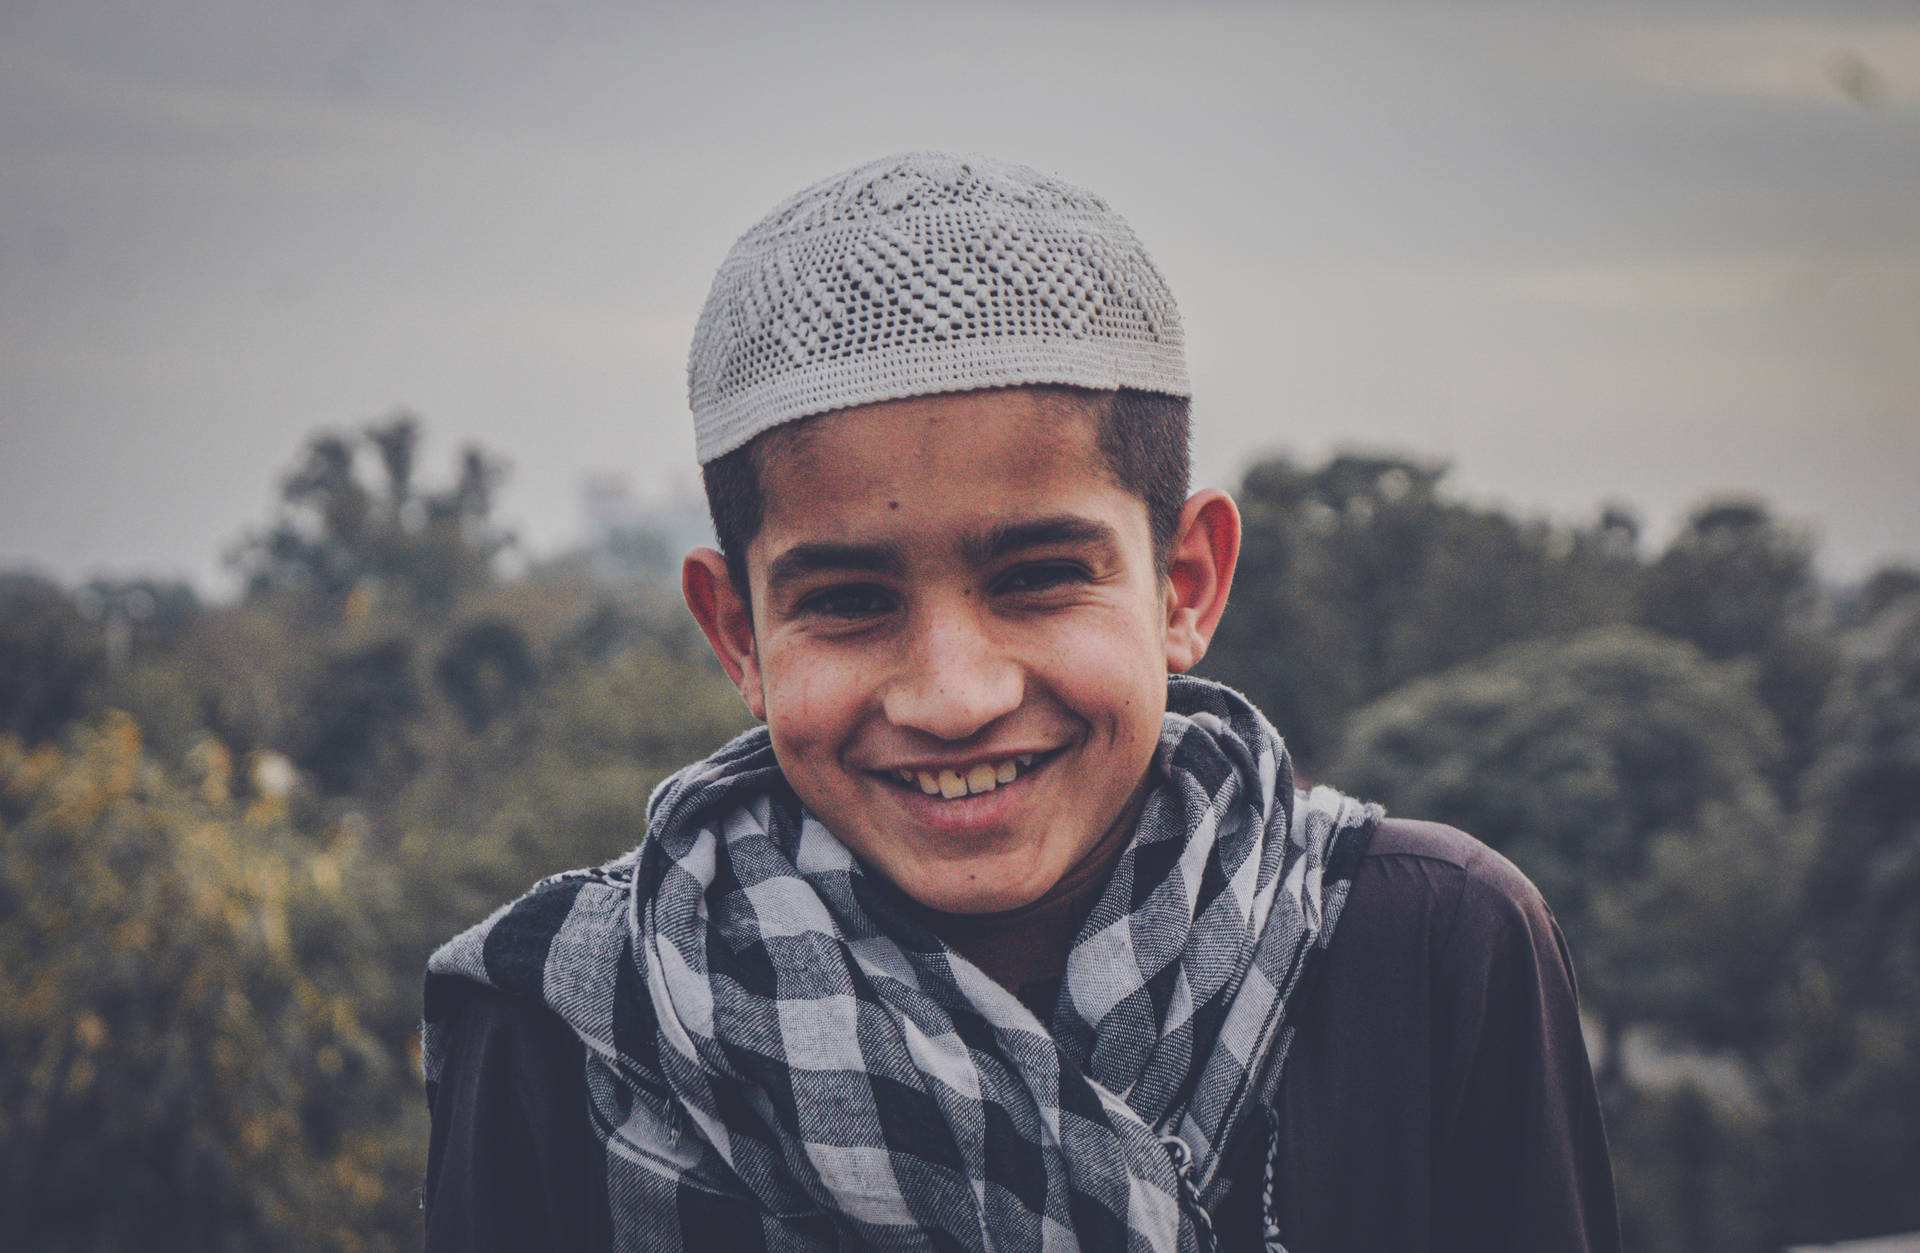 "An adorable smile of a Muslim boy" Wallpaper